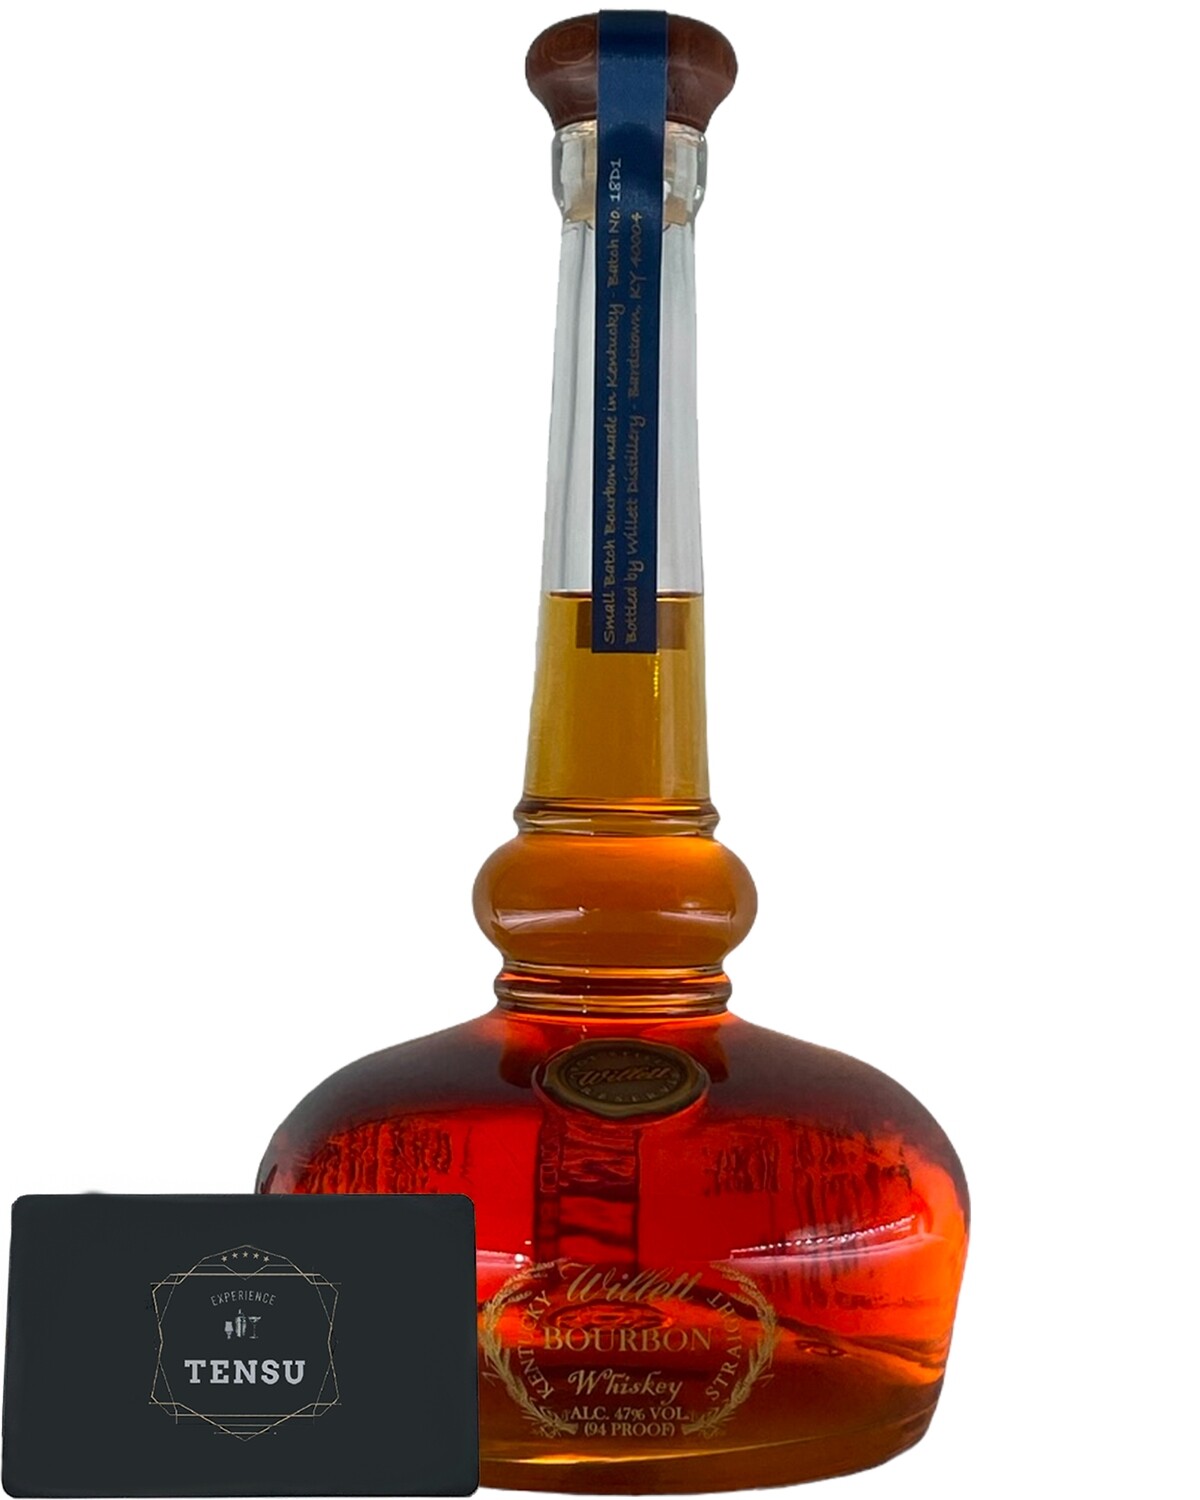 Willett Pot Still Reserve Kentucky Straight Bourbon Whiskey 47.0 "OB"